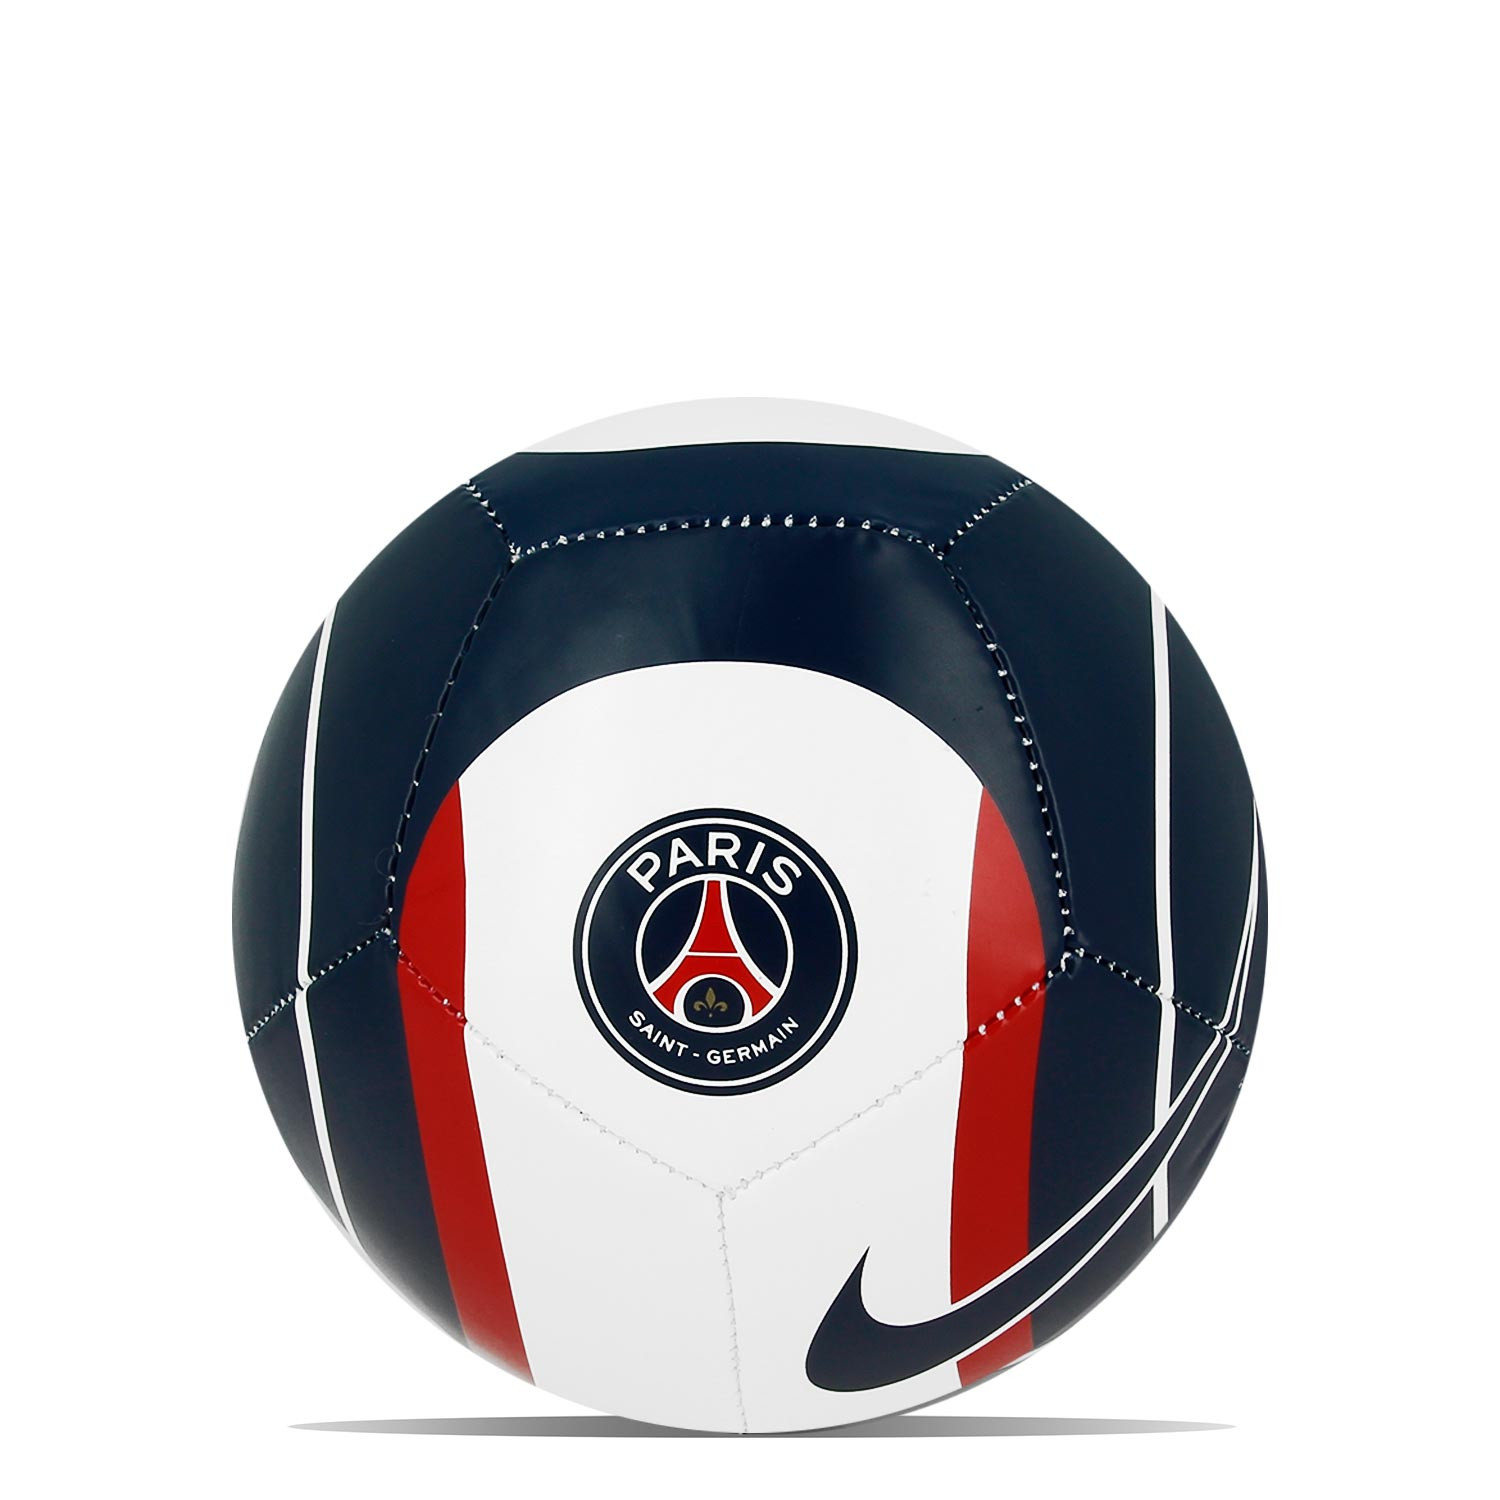 Balón de fútbol Nike Skills talla mini azul marino | futbolmania